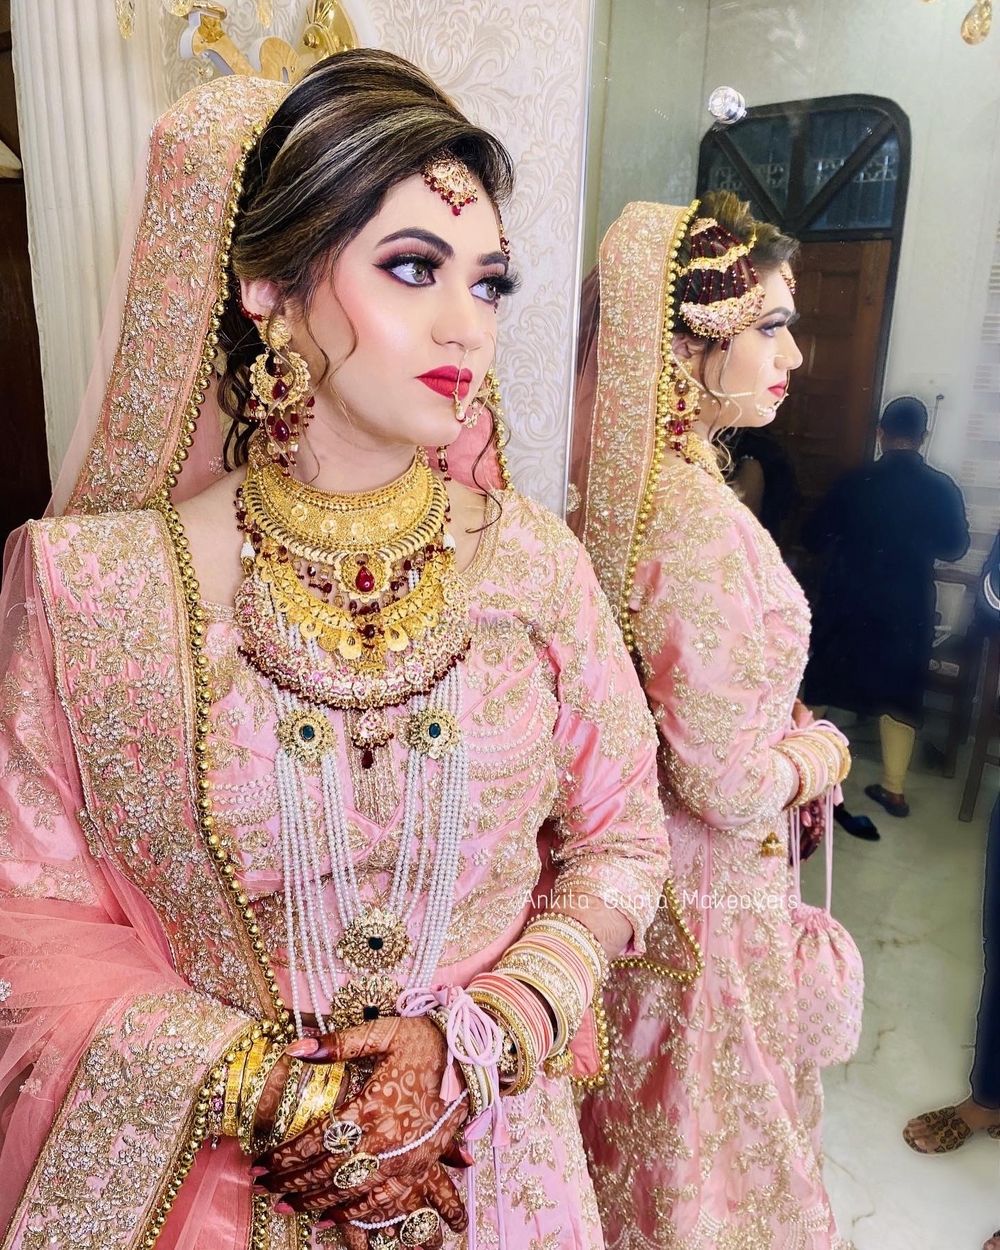 Photo From Reception Brides  - By Ankita Gupta Makeovers